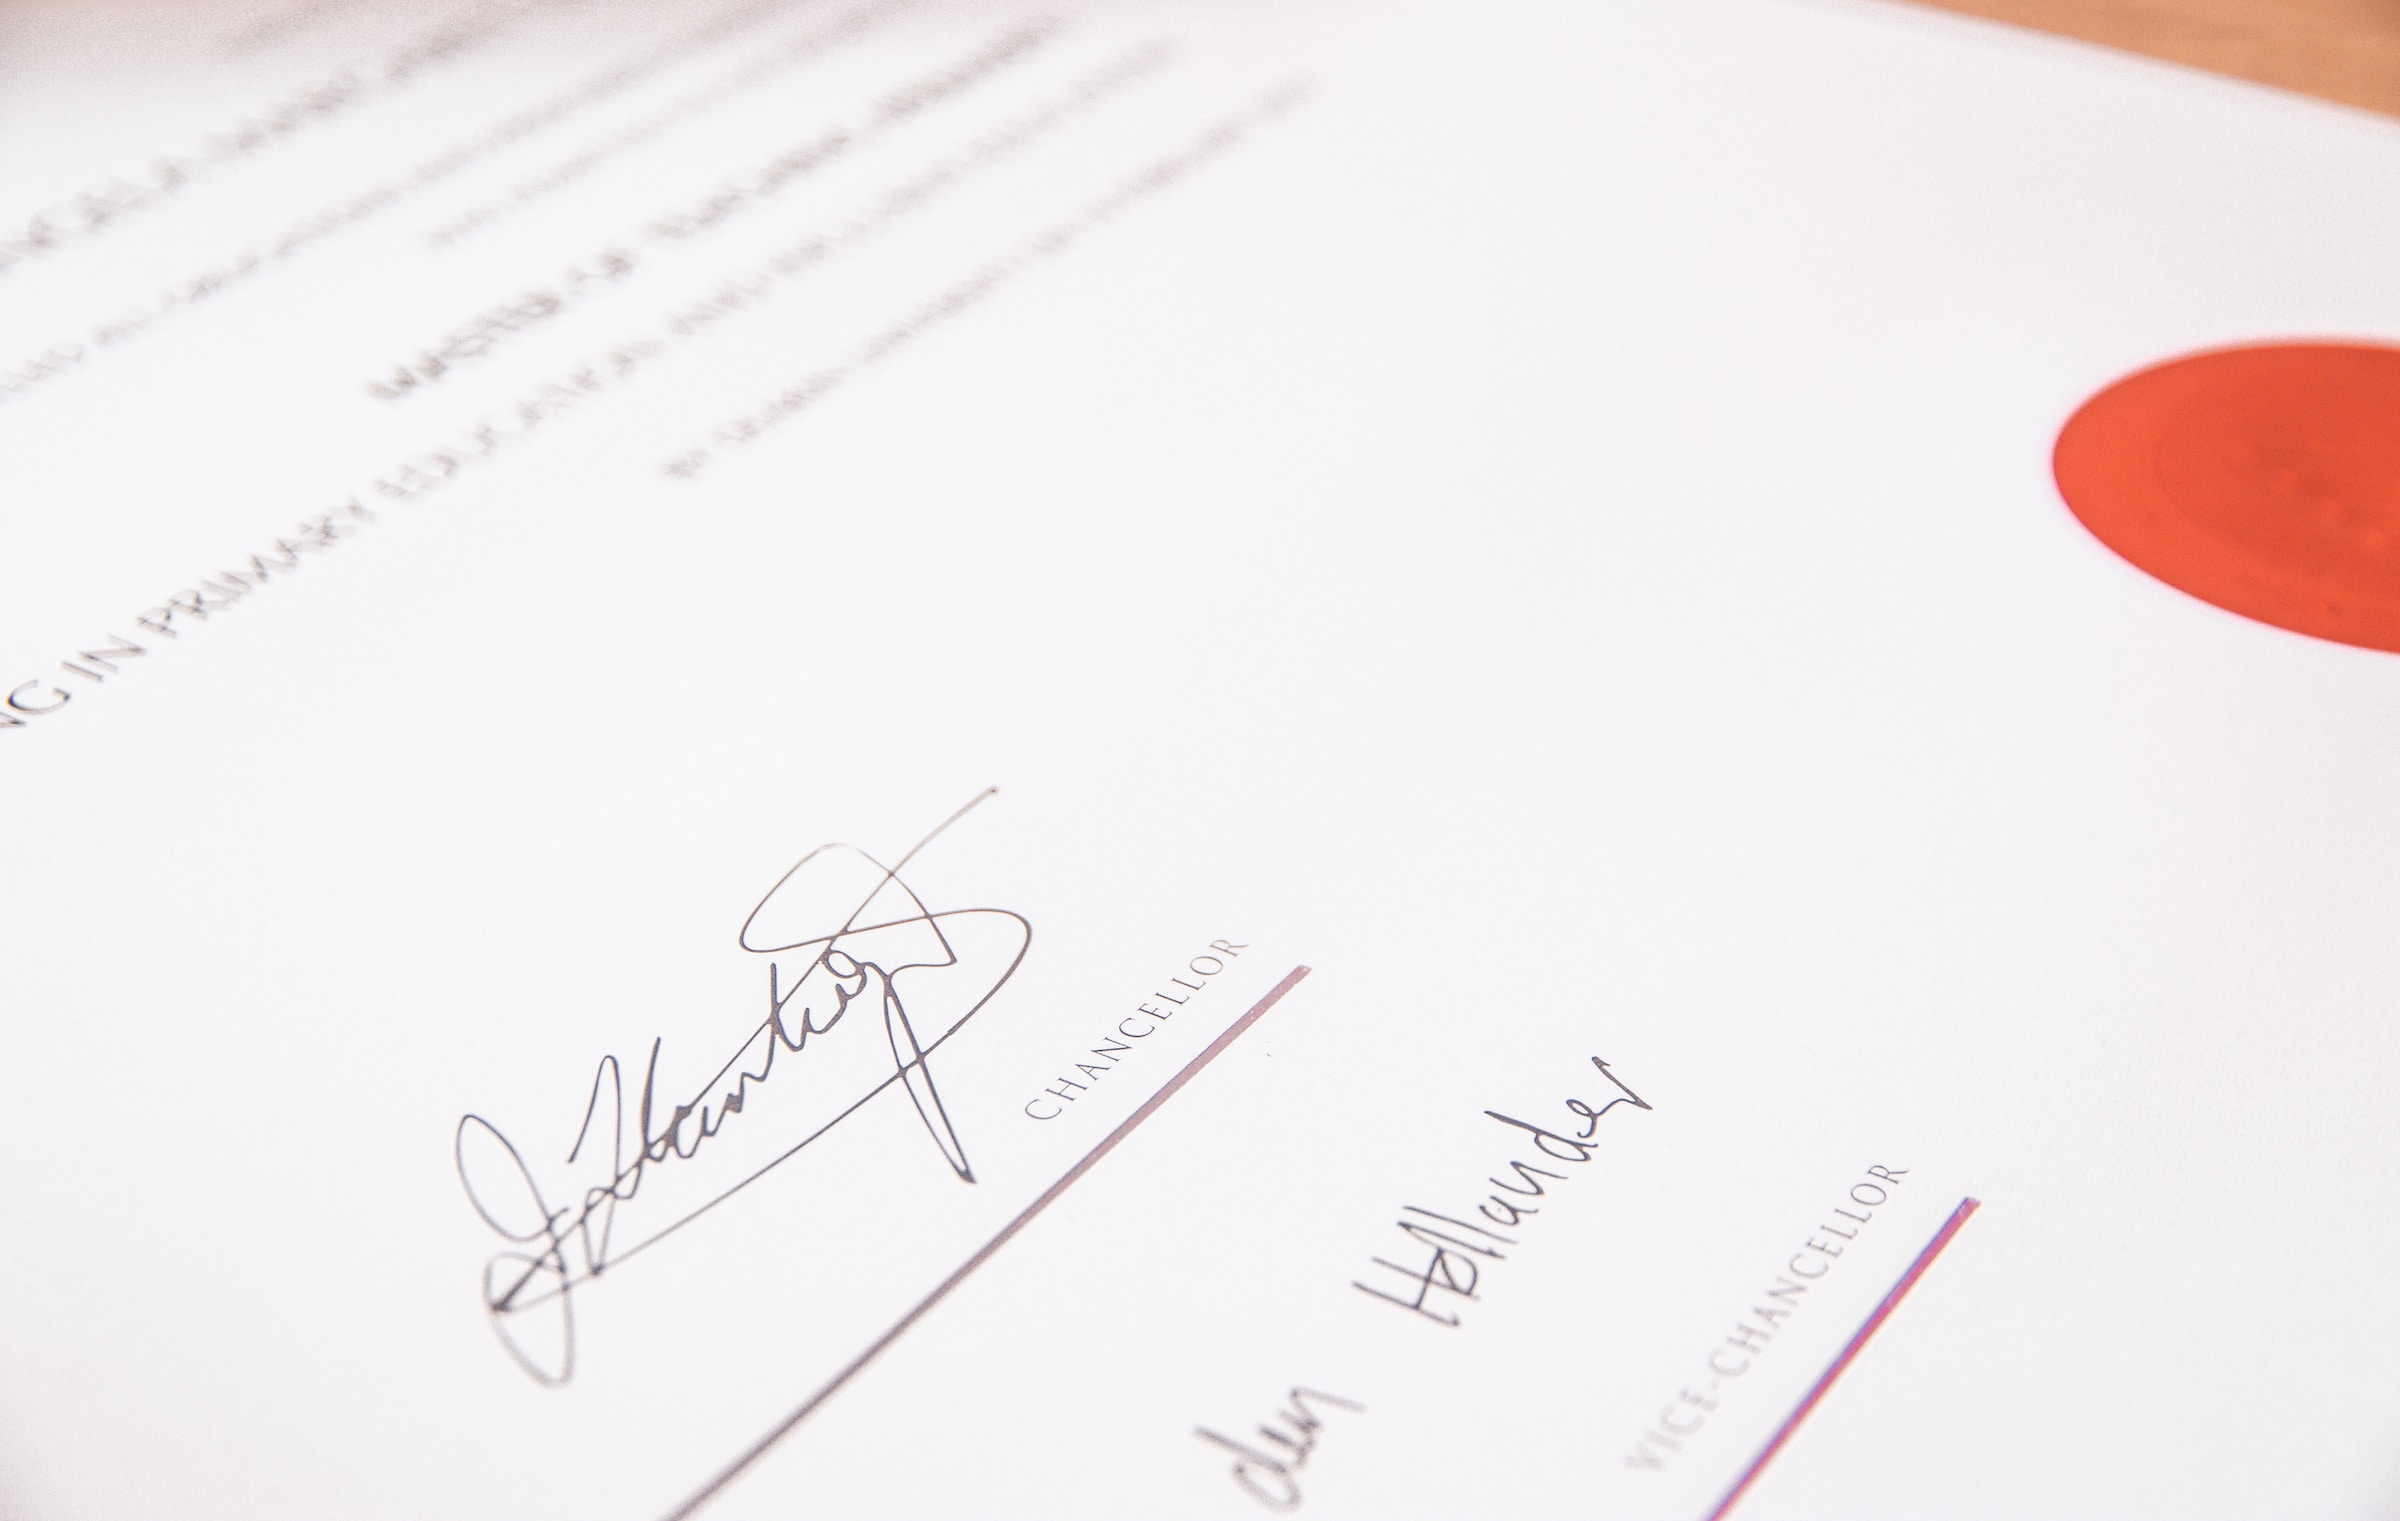 Legal form with signatures | Source: Unsplash